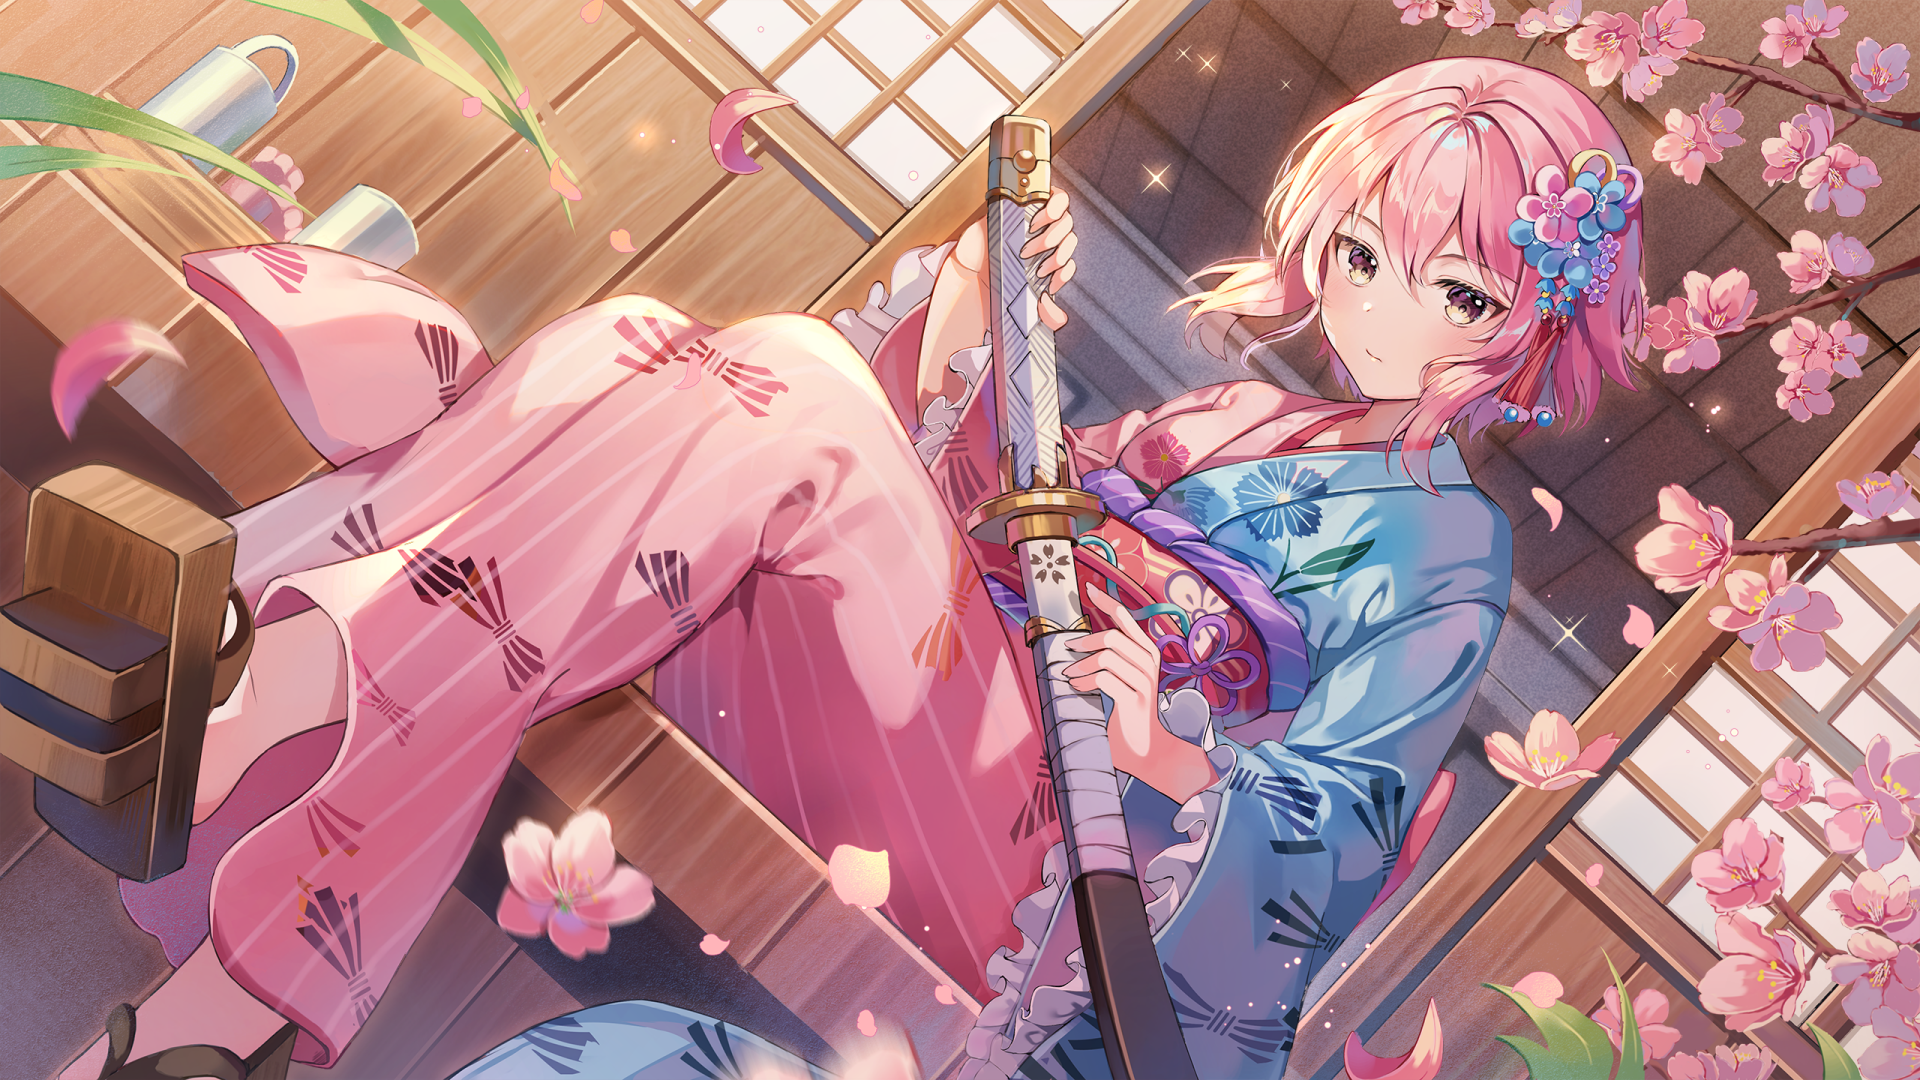 Anime 1920x1080 anime anime girls Alchemy Stars fantasy art fantasy girl sword weapon katana women with swords cherry blossom pink hair flower in hair pink clothing sitting